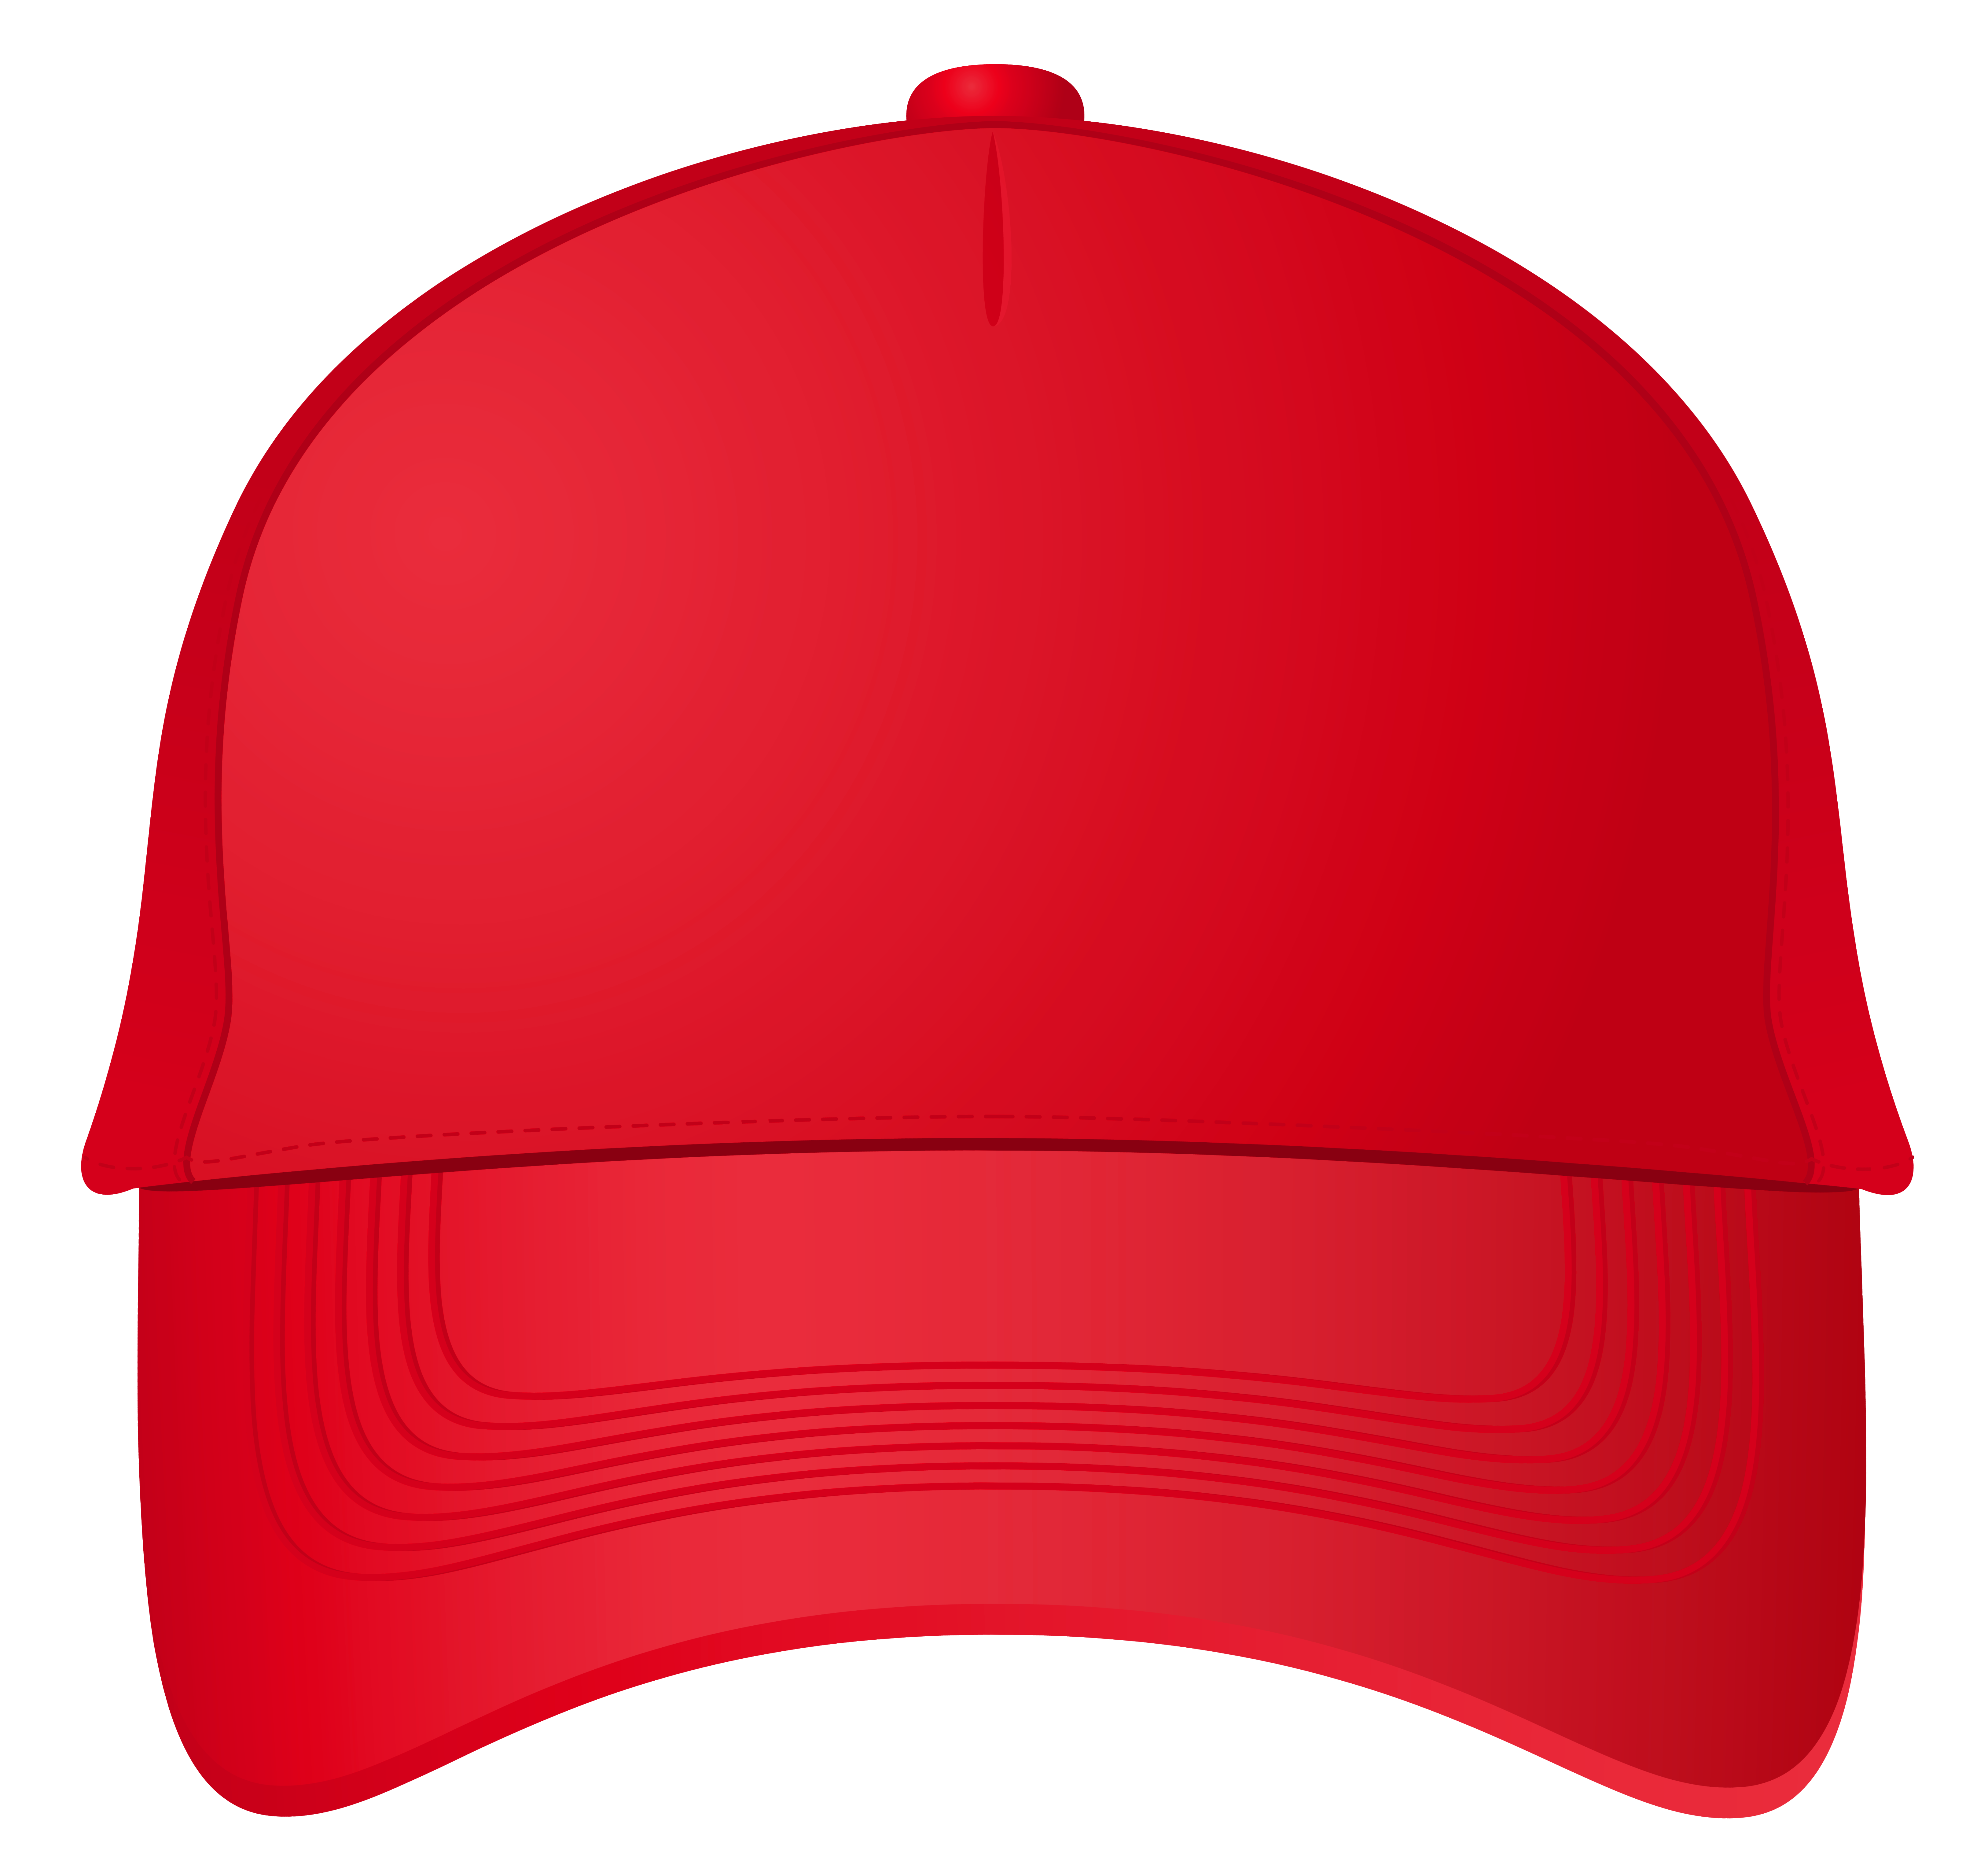 Red Baseball Cap PNG Clipart - Best WEB Clipart